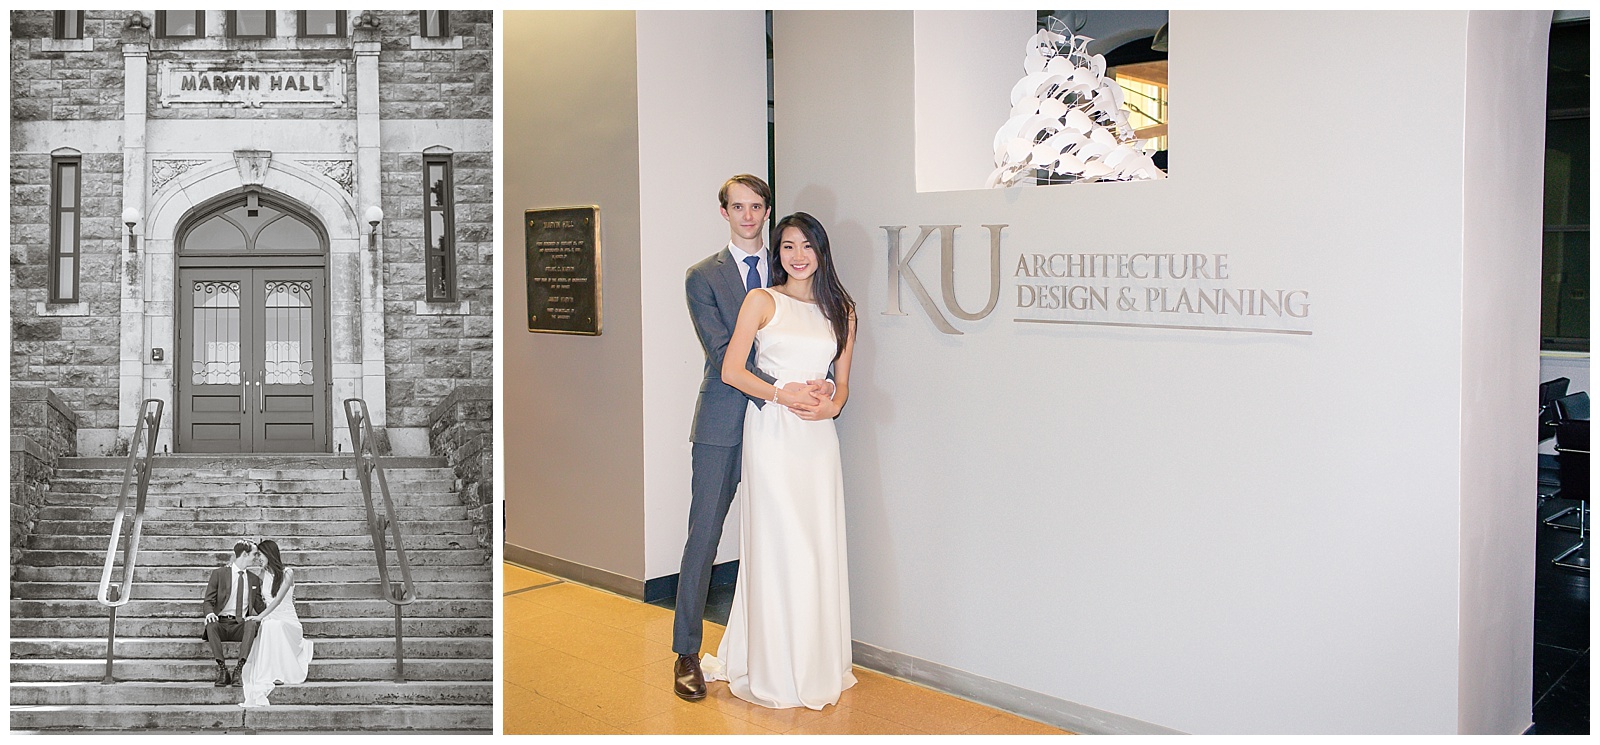 Wedding photography at the University of Kansas in Lawrence, Kansas.